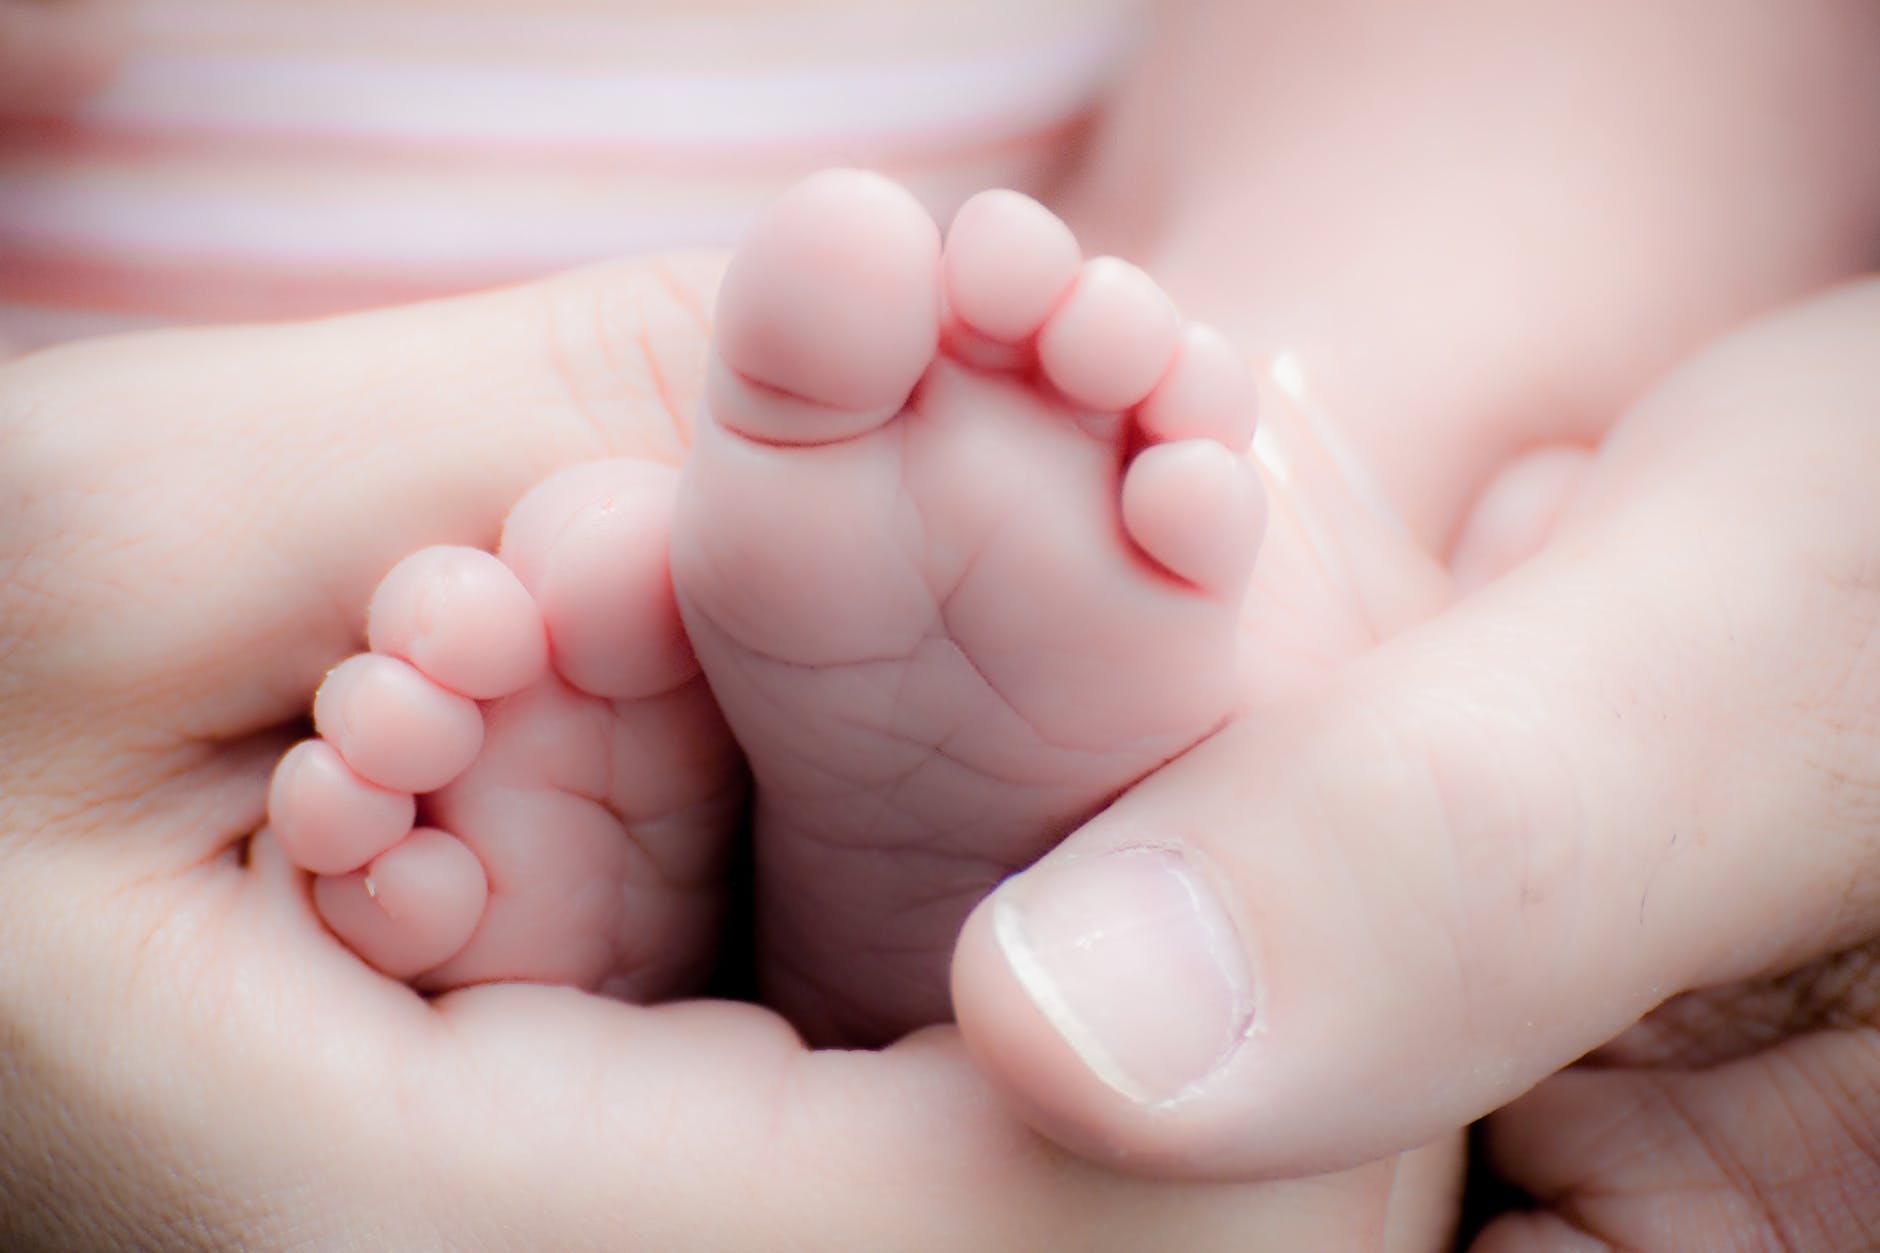 Aproximadamente nacen 15 millones de bebés prematuros cada año